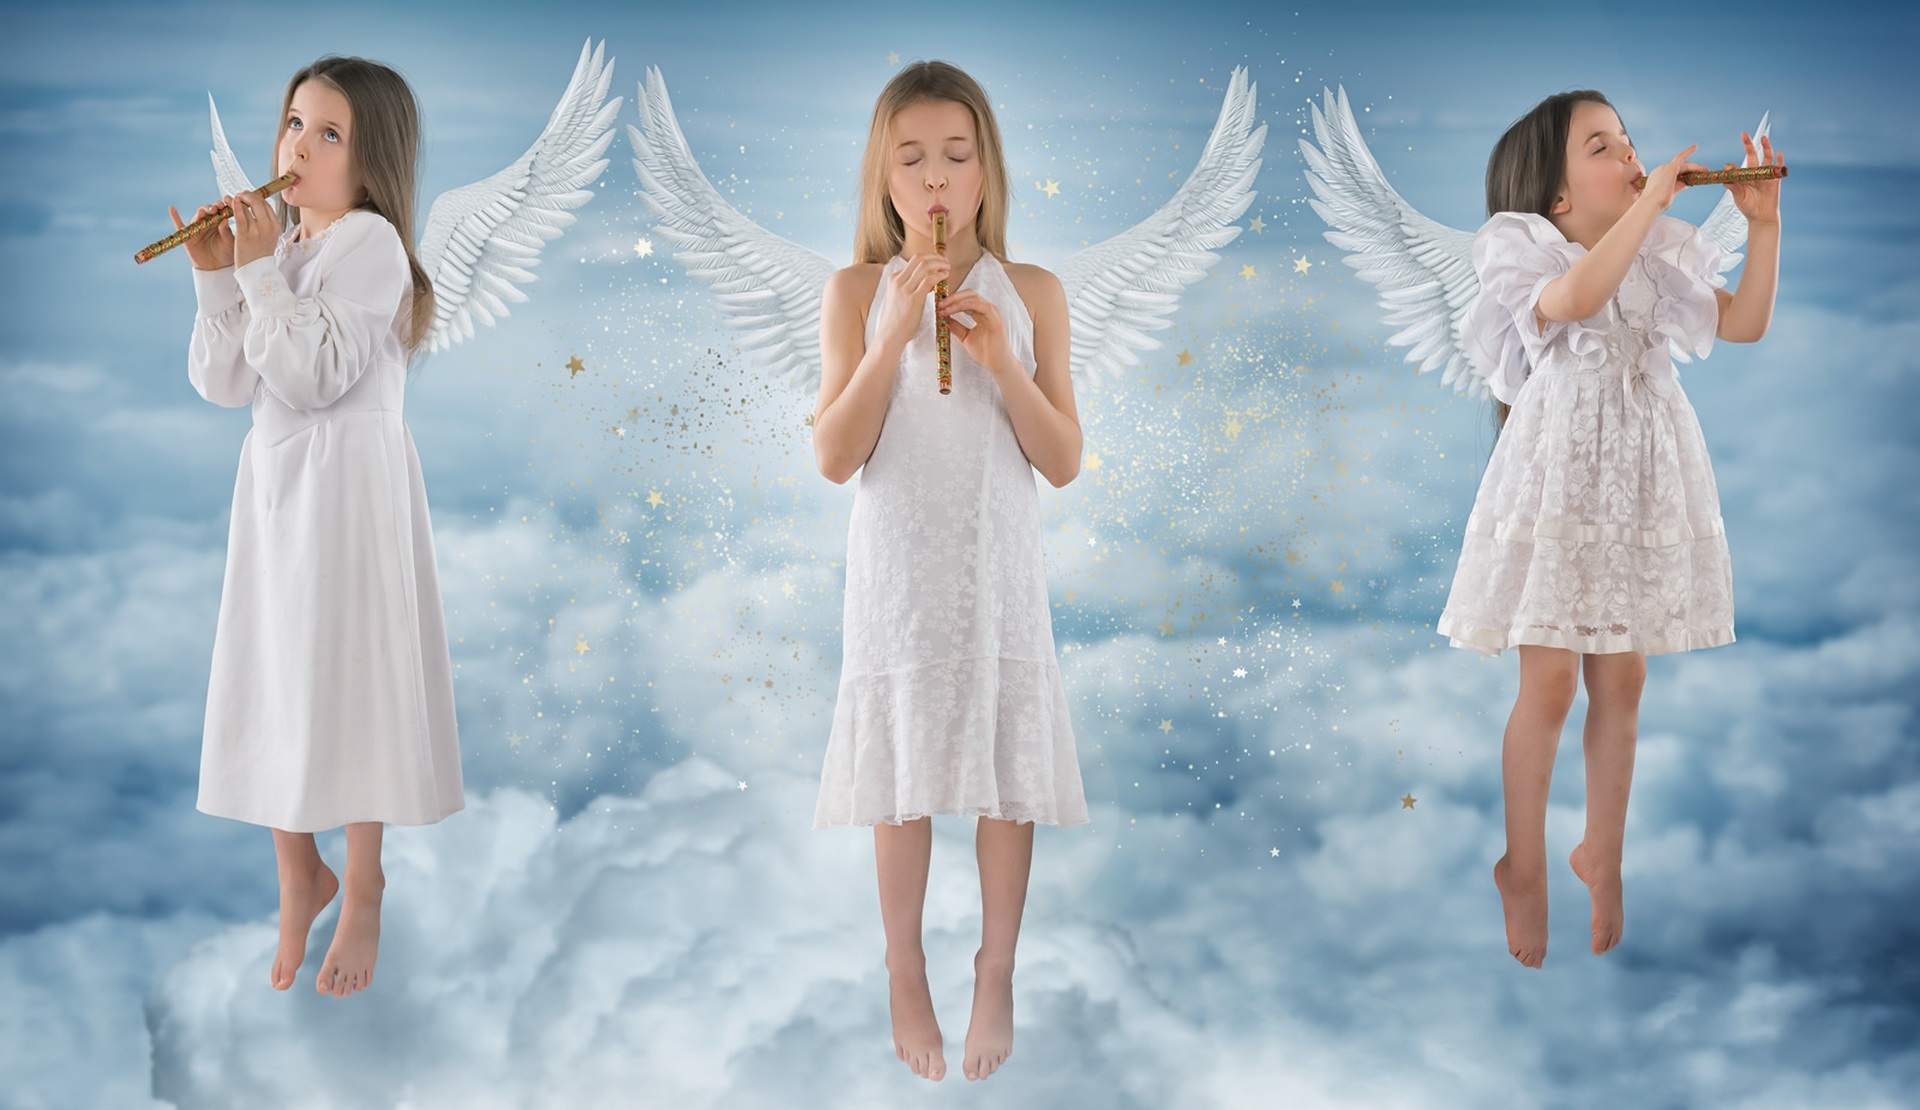 Three angels. Ангел. Красивые ангелочки. Небесные ангелы. Девушка - ангел.